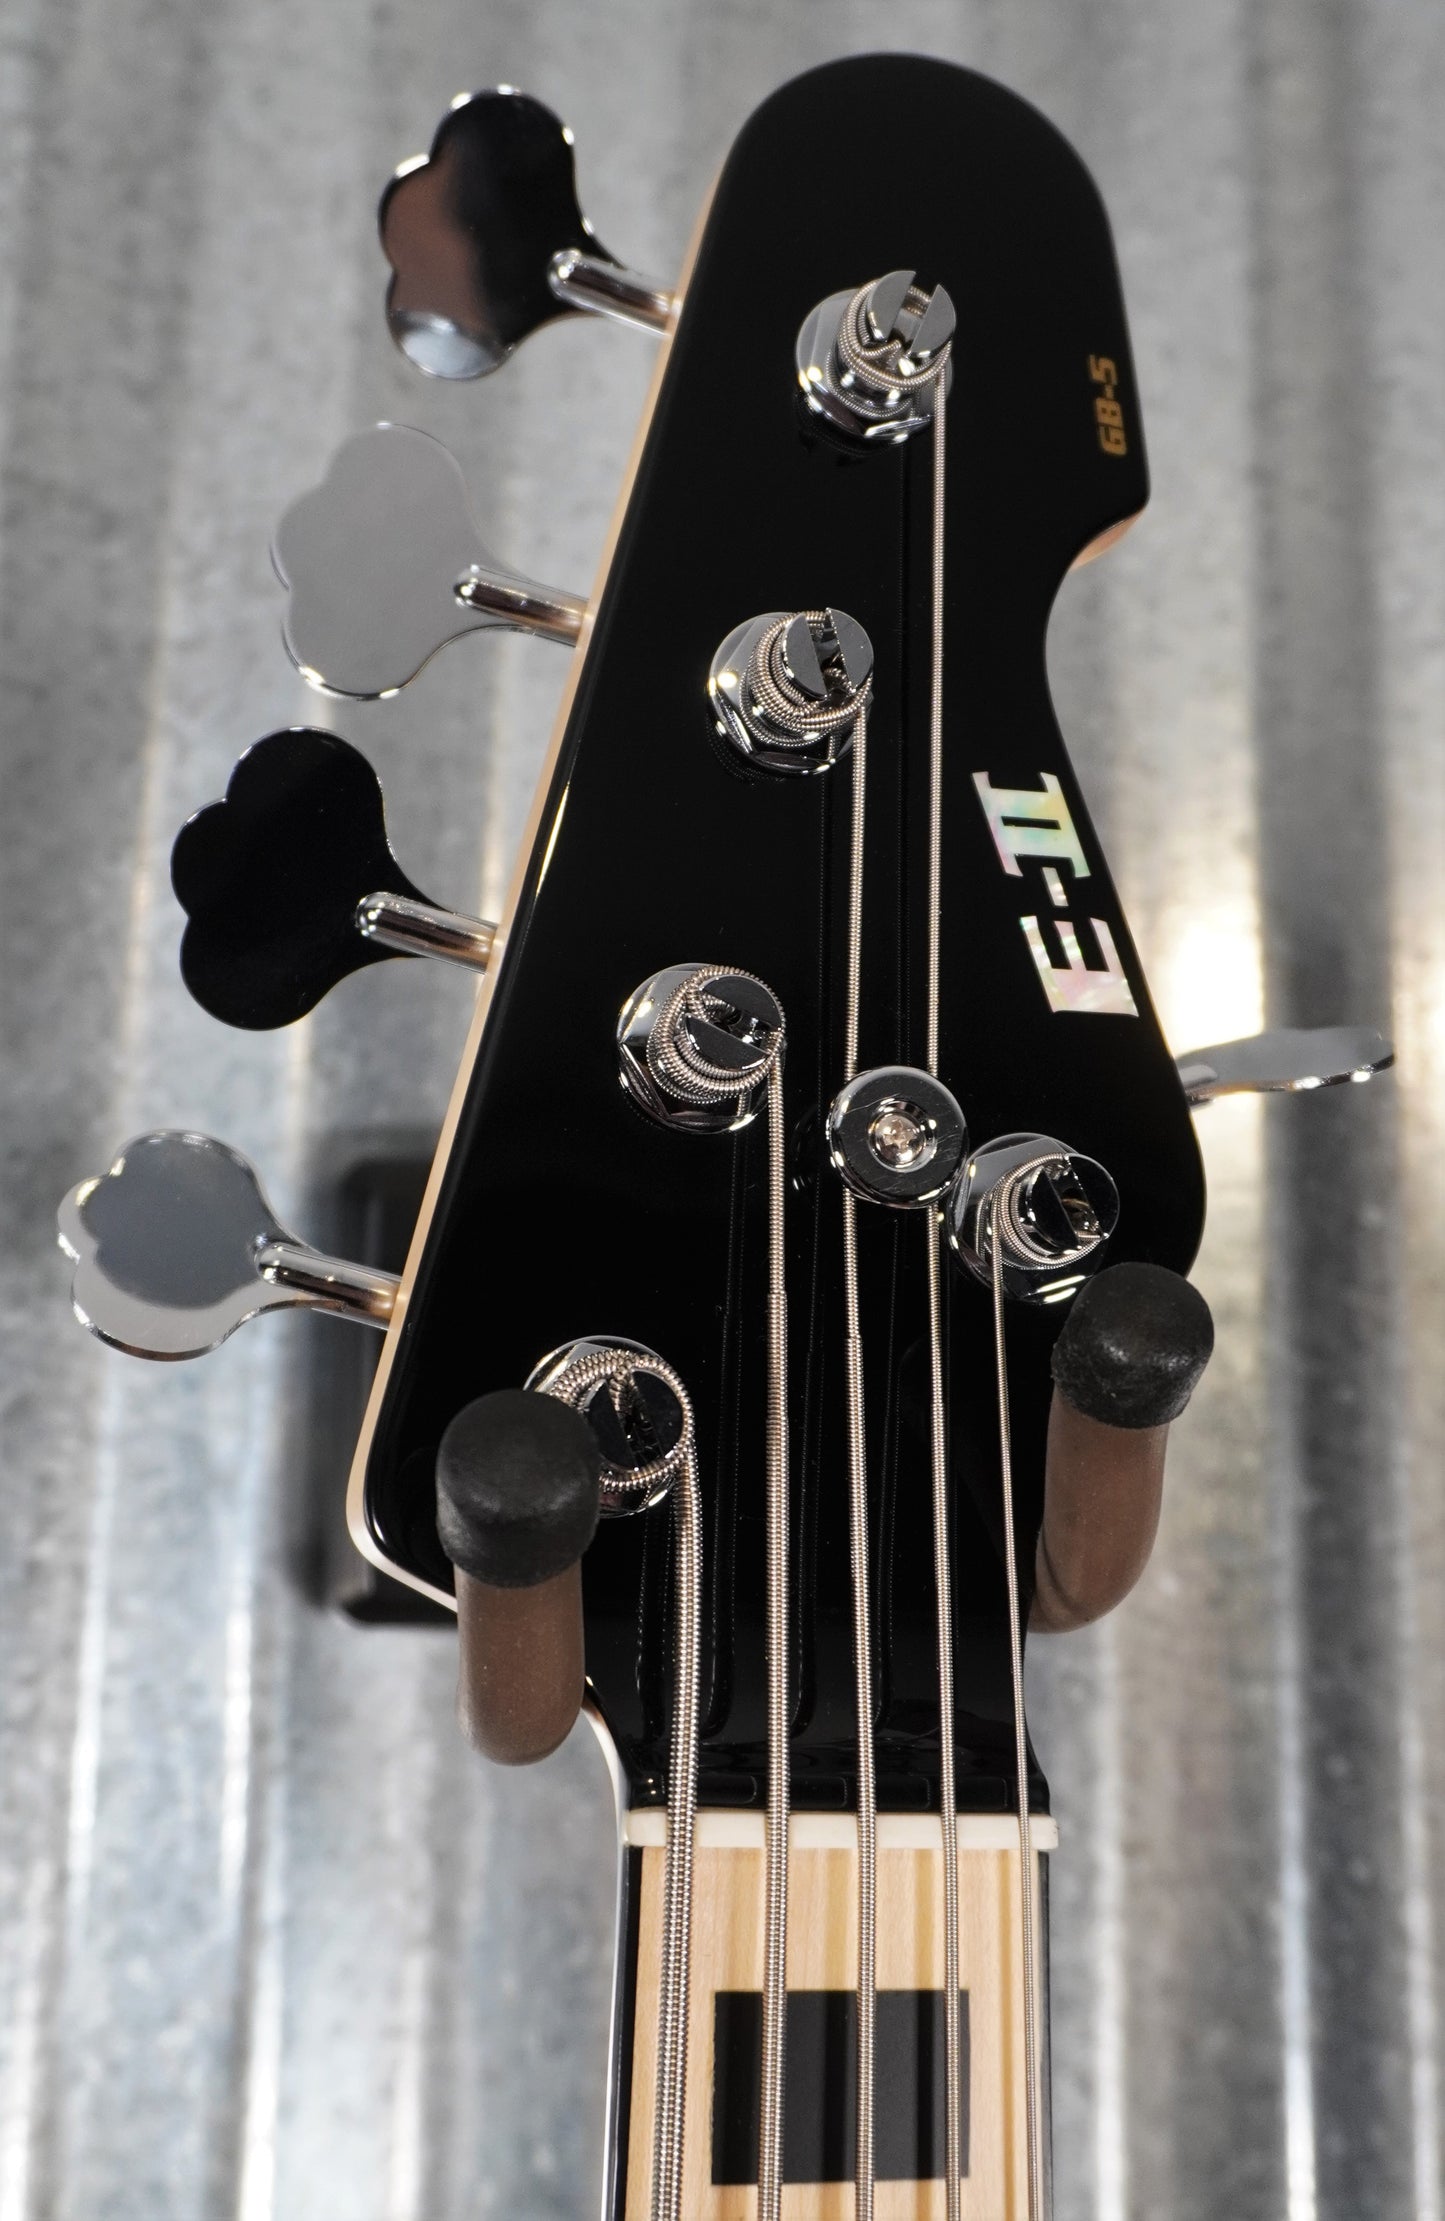 ESP E-II GB-5 5 String Bass Black Seymour Duncan & Case EIIGB5BLK Japan Blem #ES4045193